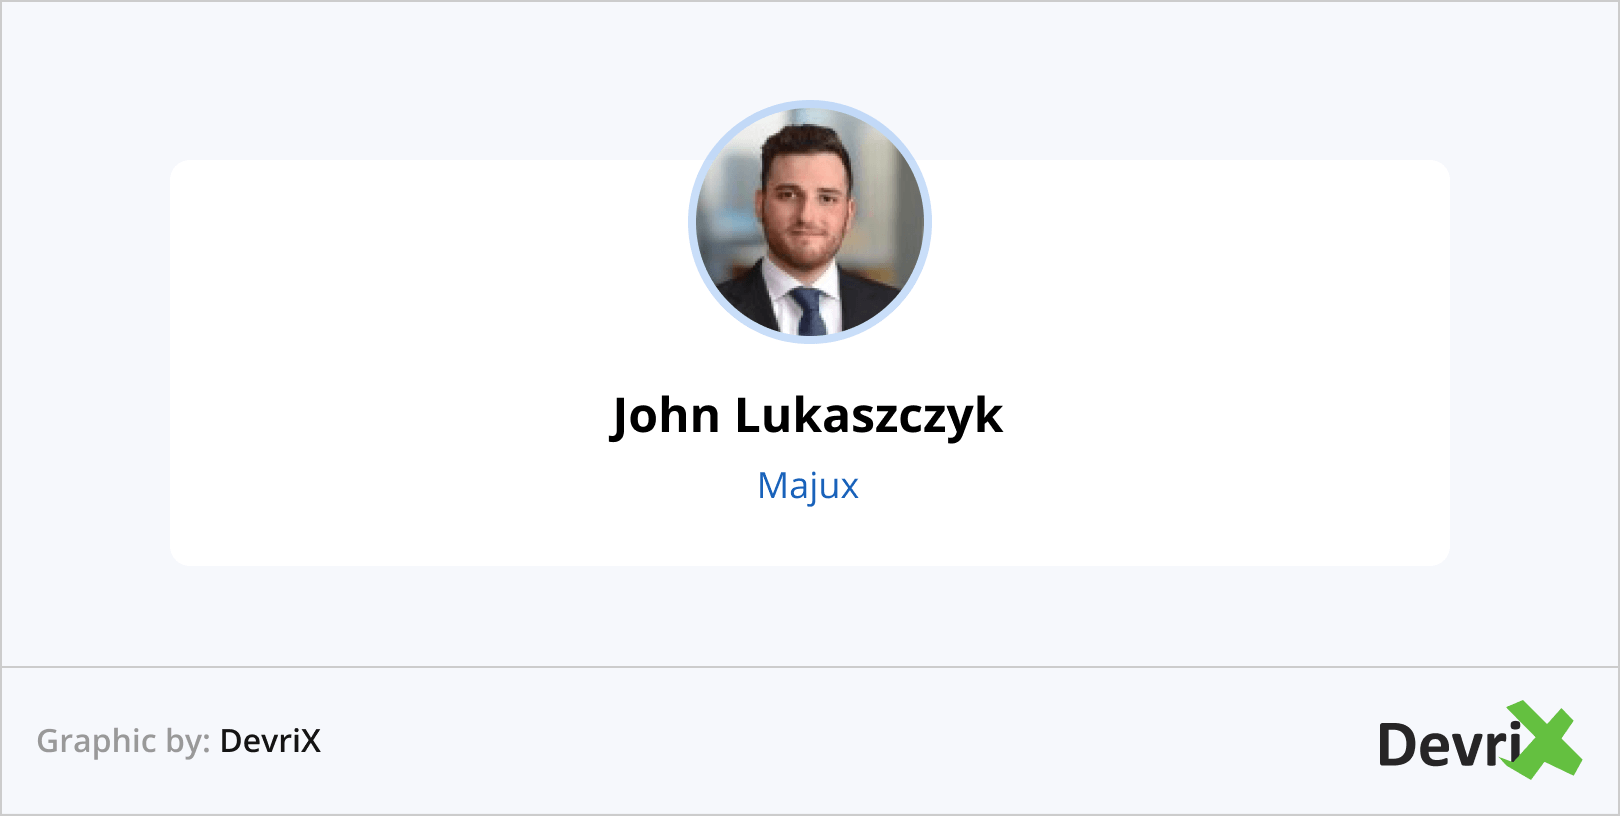 John Lukaszczyk